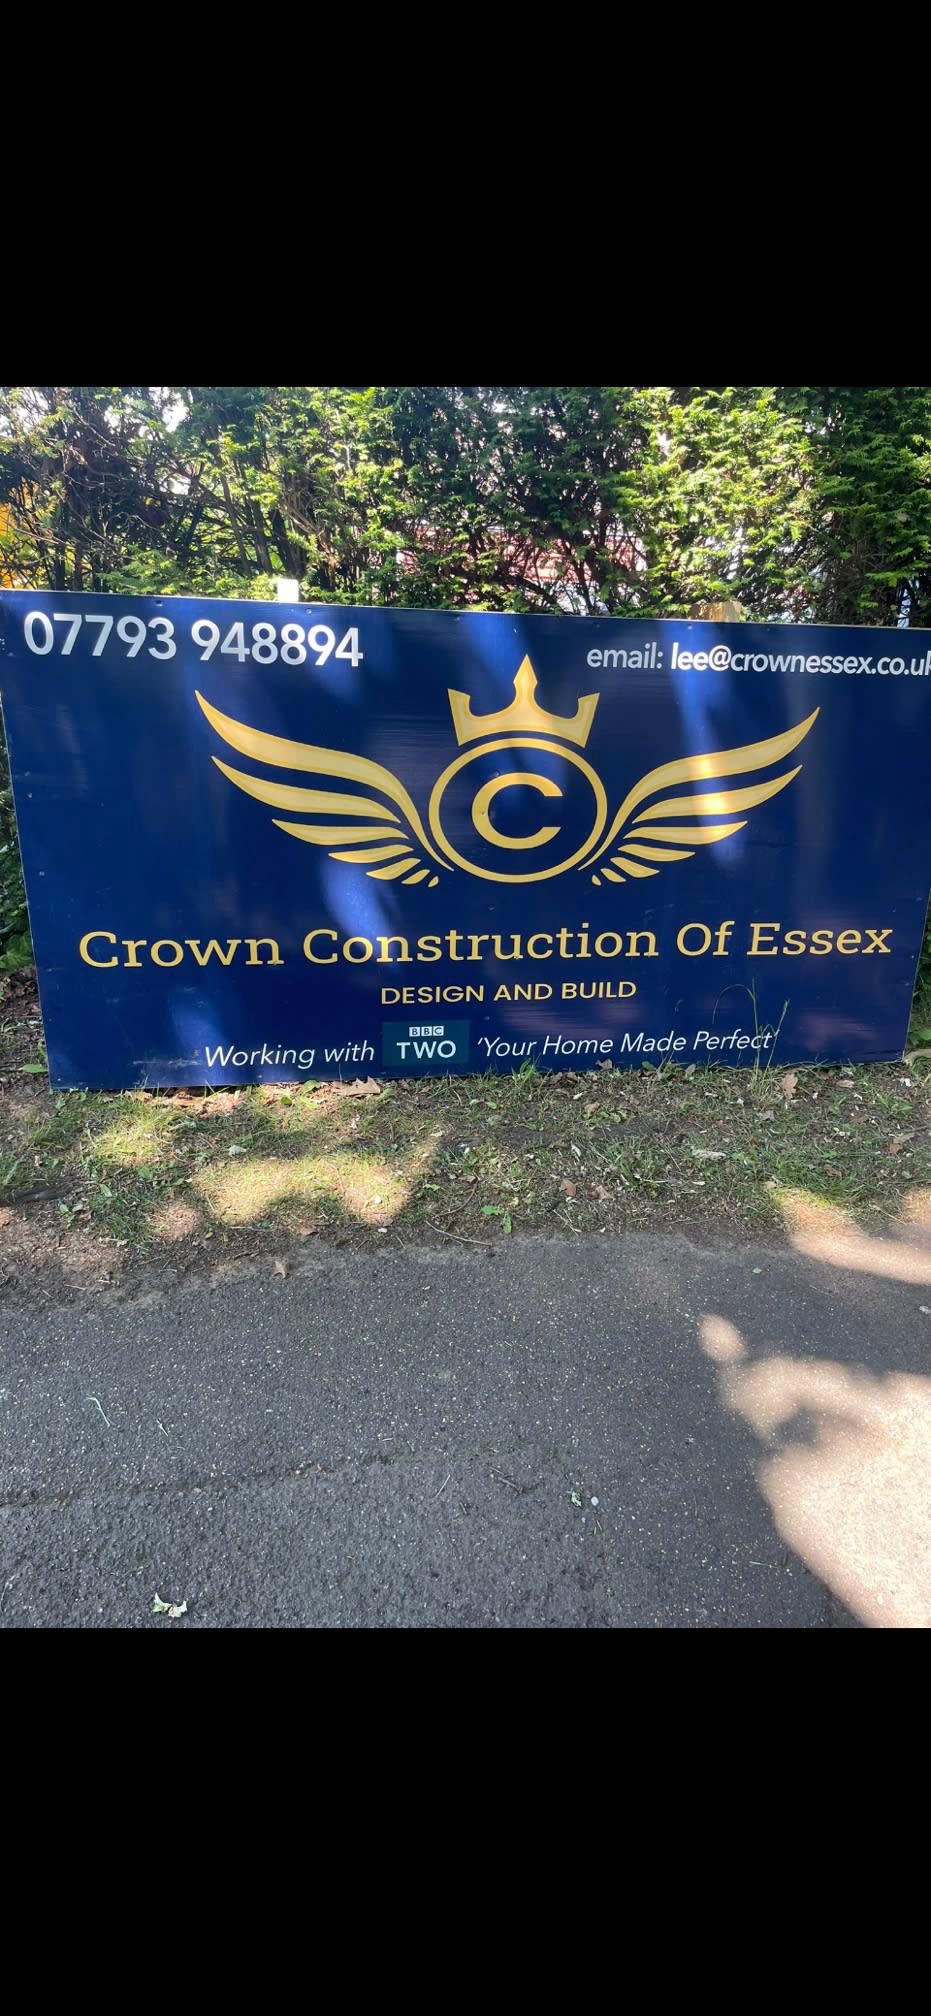 Crown Construction of Essex Ltd Basildon 07793 948894